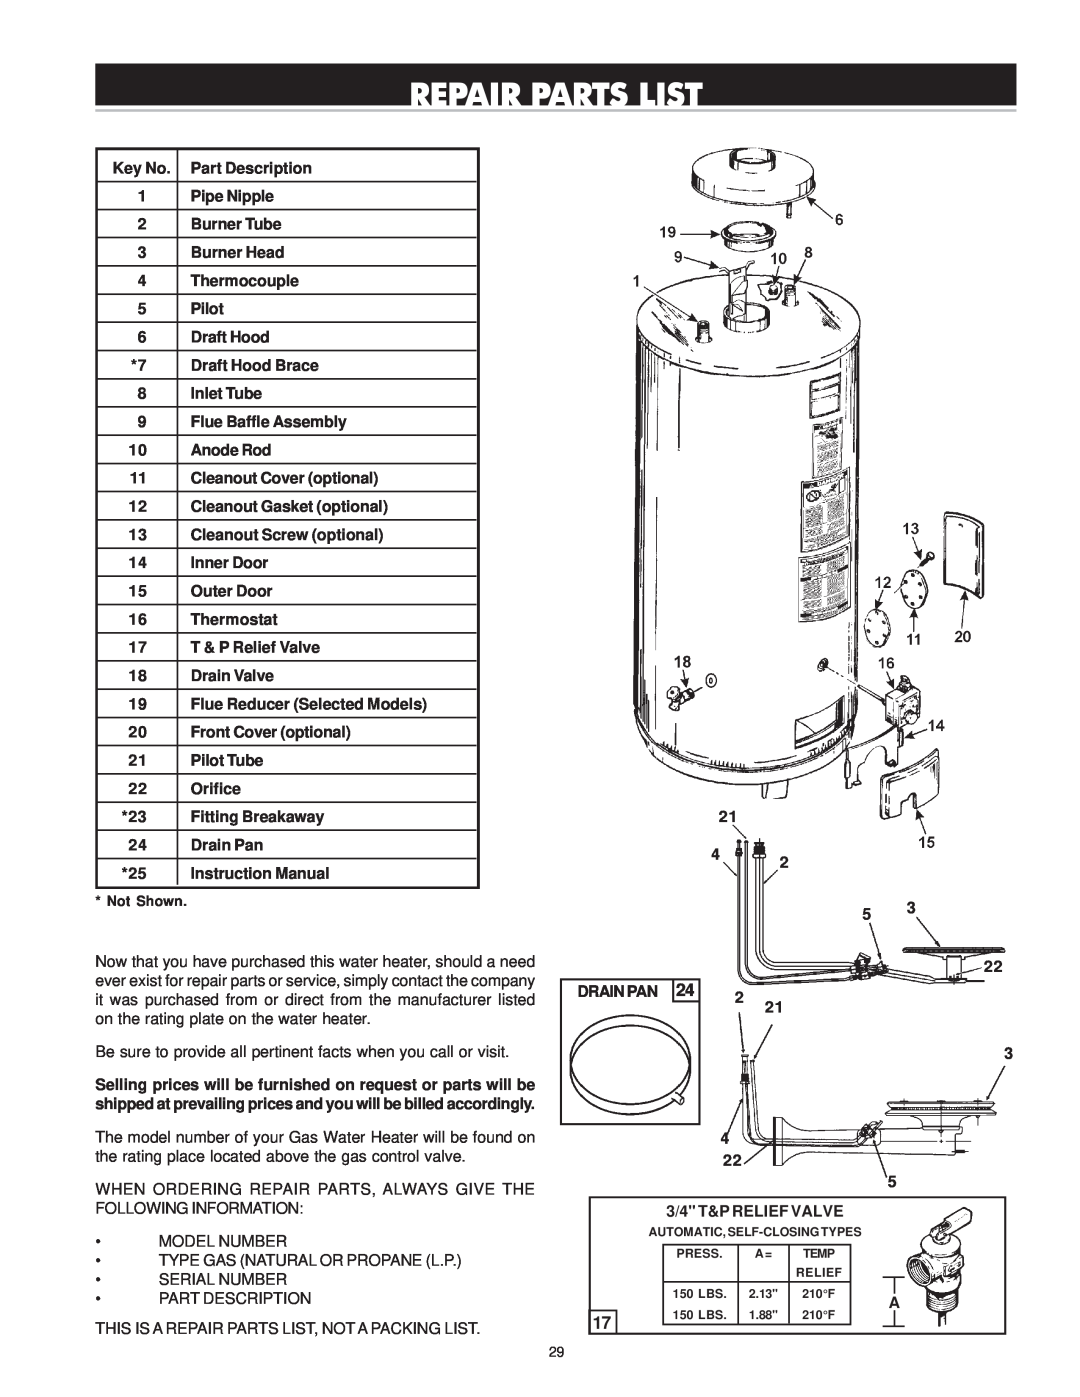 Reliance Water Heaters 606 Series Repair Parts List, Part Description, Pipe Nipple, Burner Tube, Burner Head, Thermocouple 